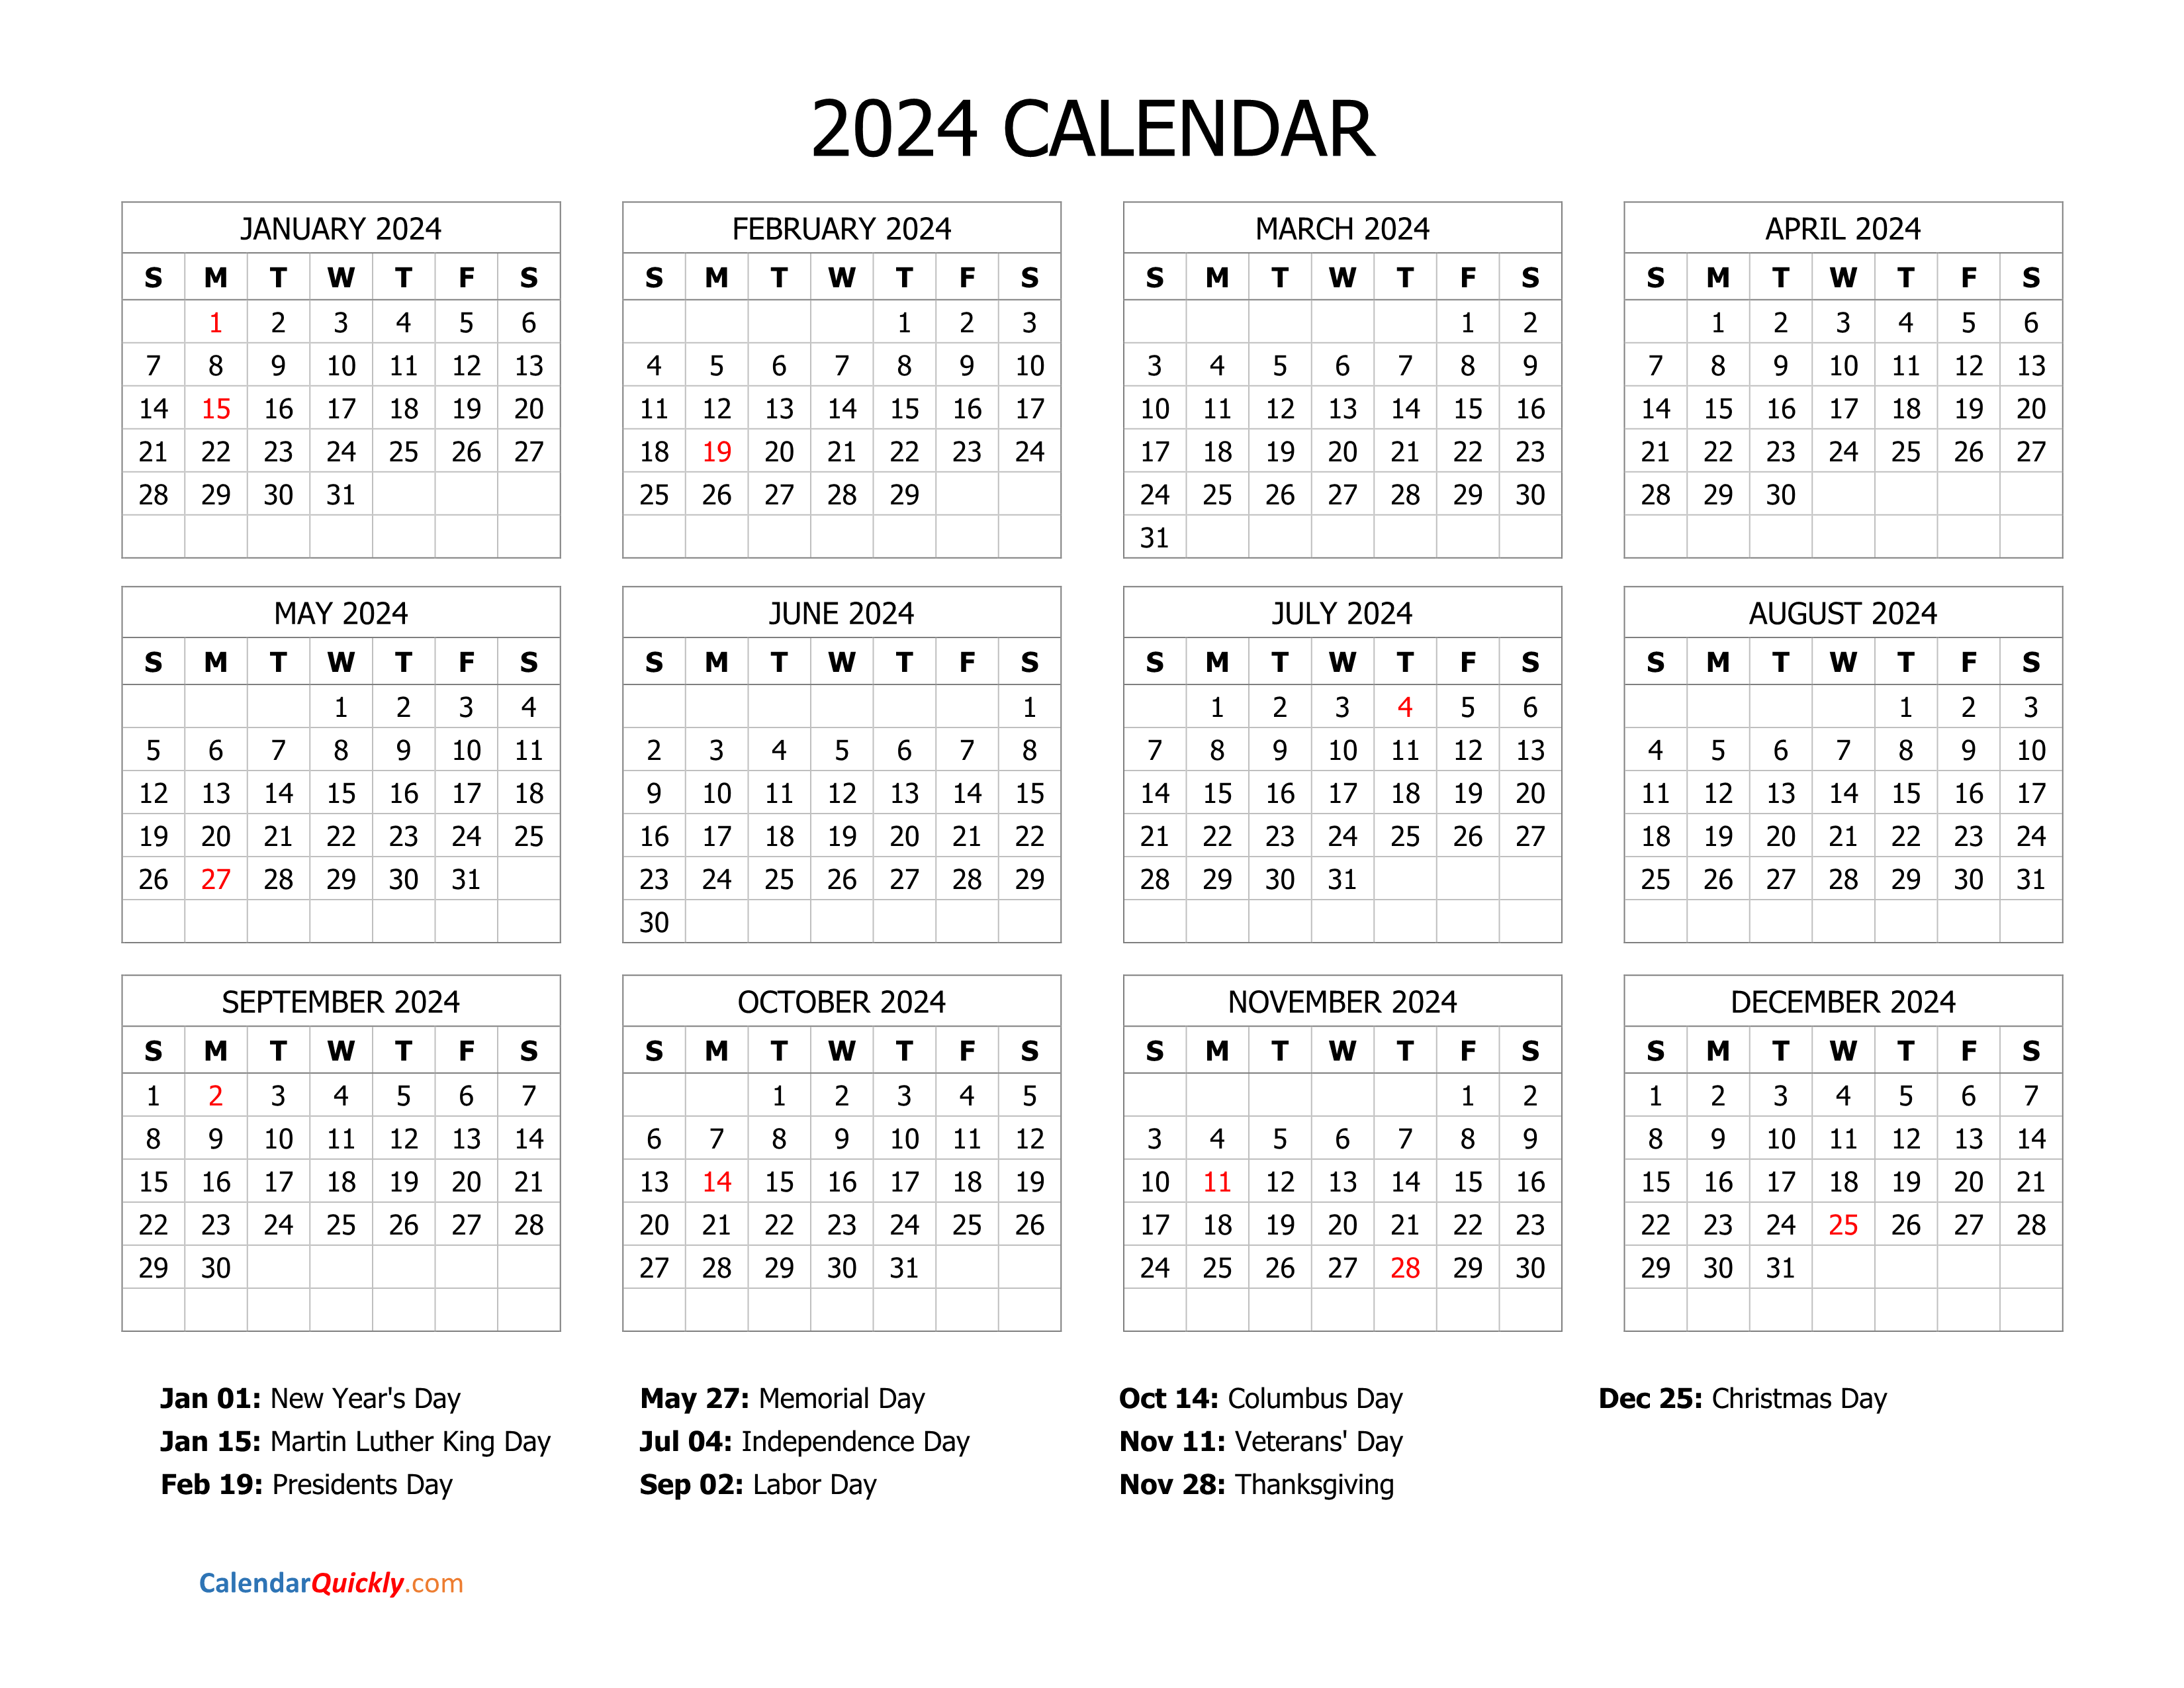 Printable Calendar 2024 With Holidays - Free Printable 2024 Calendar November 24calendars